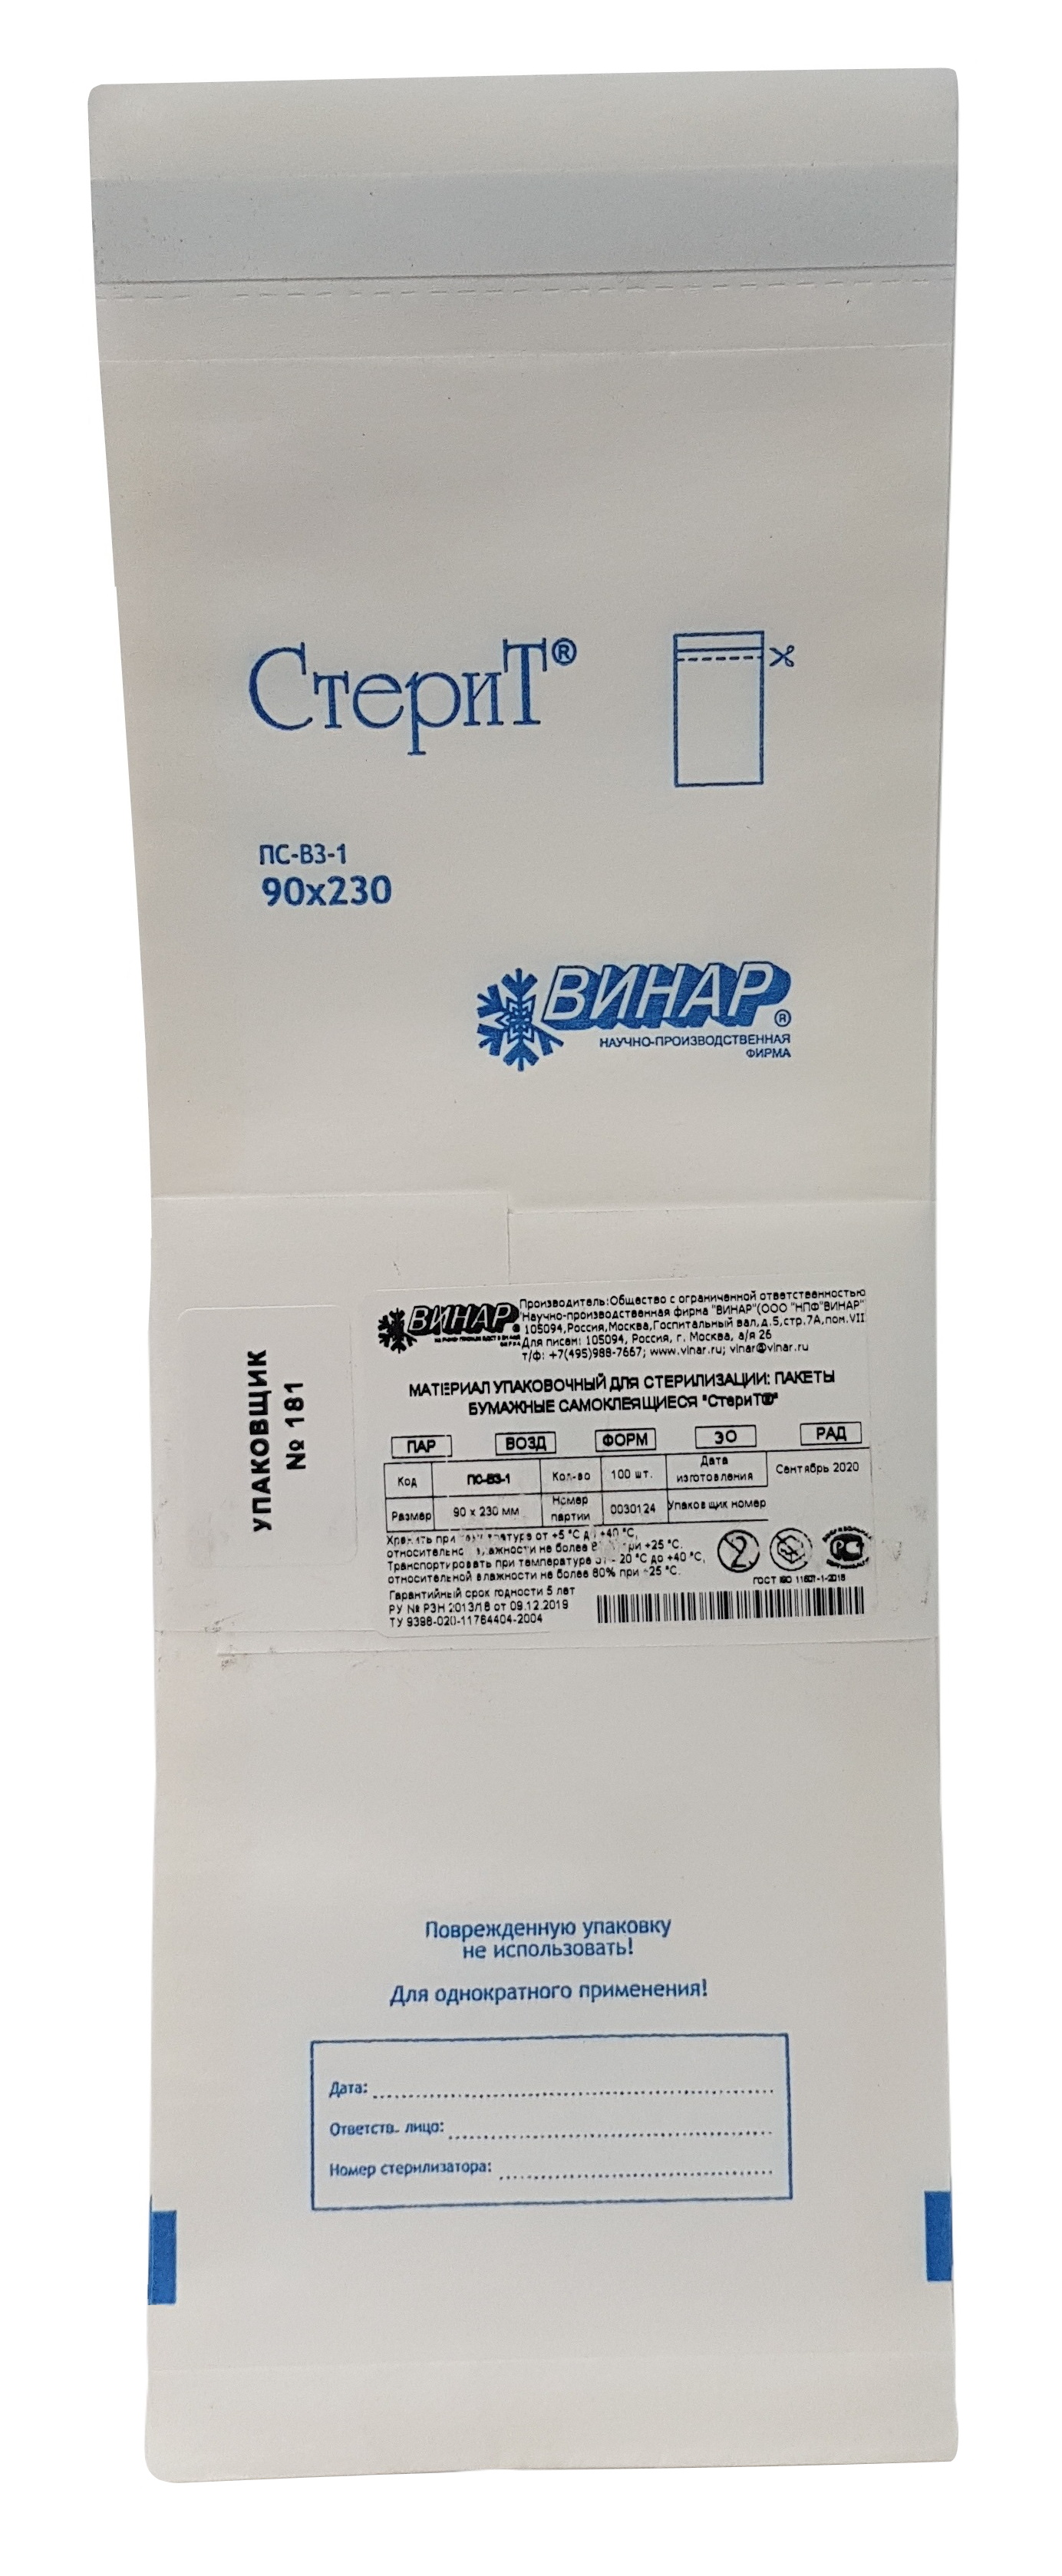 Пакеты бумажные самоклеящиеся Стерит ПС-ВЗ-1, Винар,90х230 мм, 100 шт. пакеты для стерилизации dgm steriguard 100х200 мм 100 шт